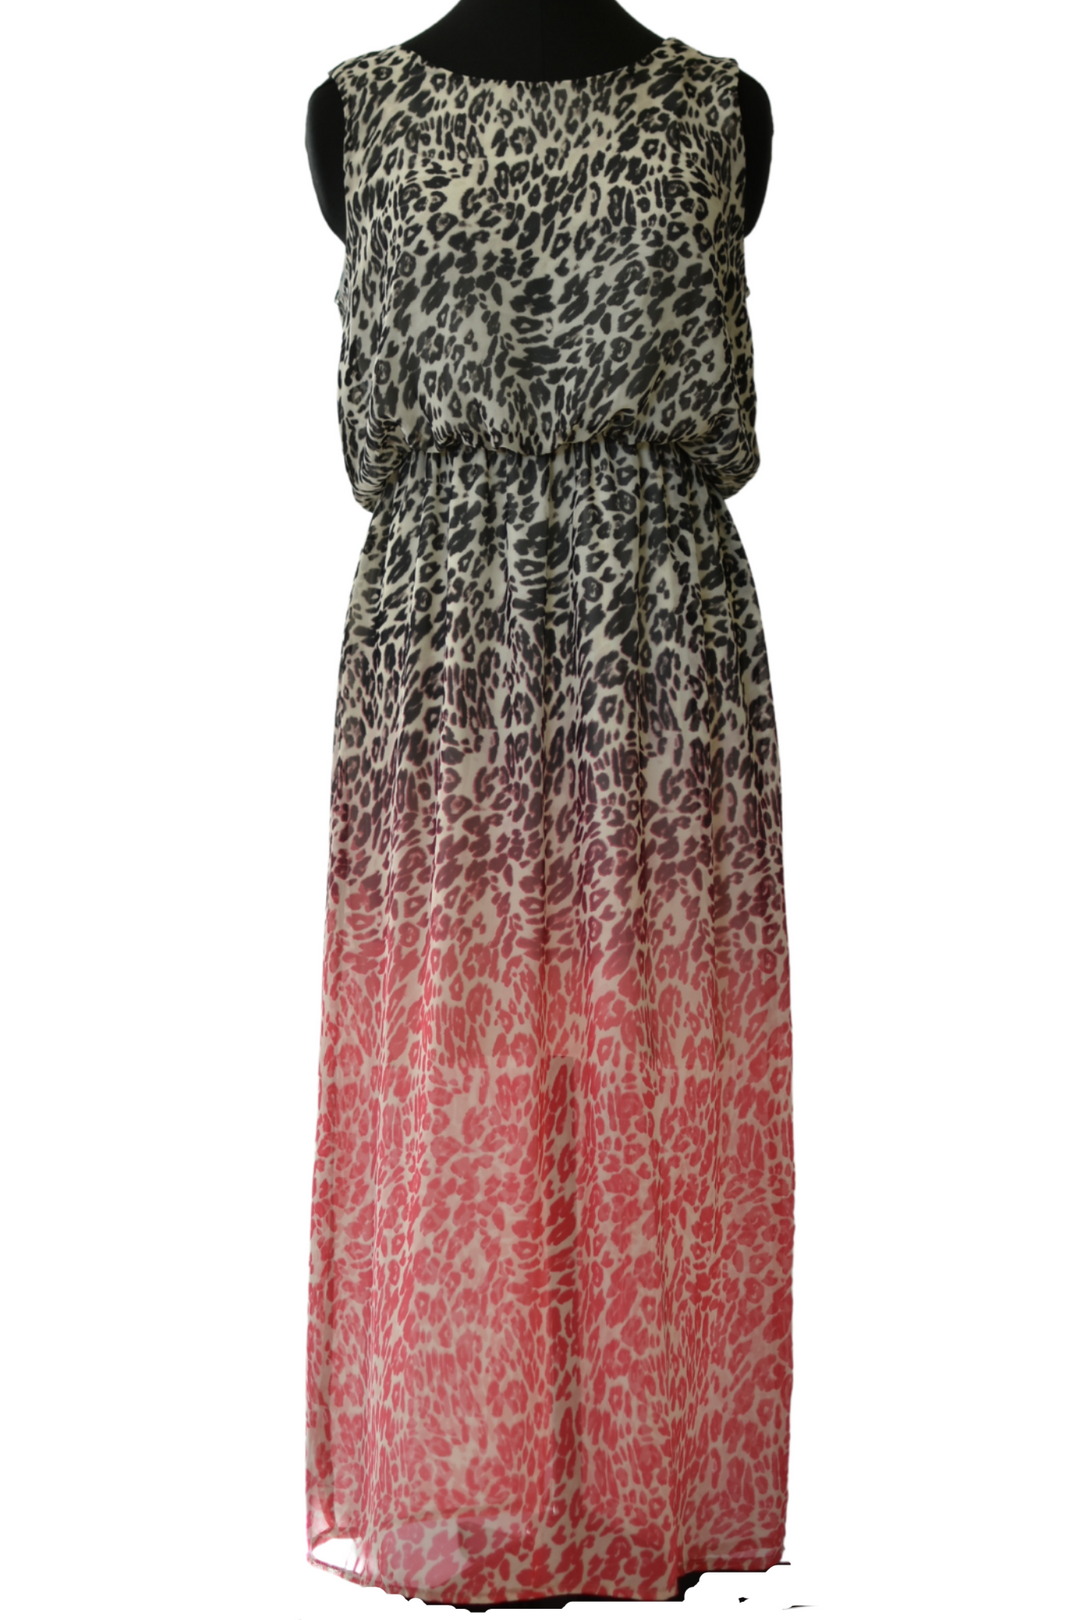 Ombre Leopard Print Dress